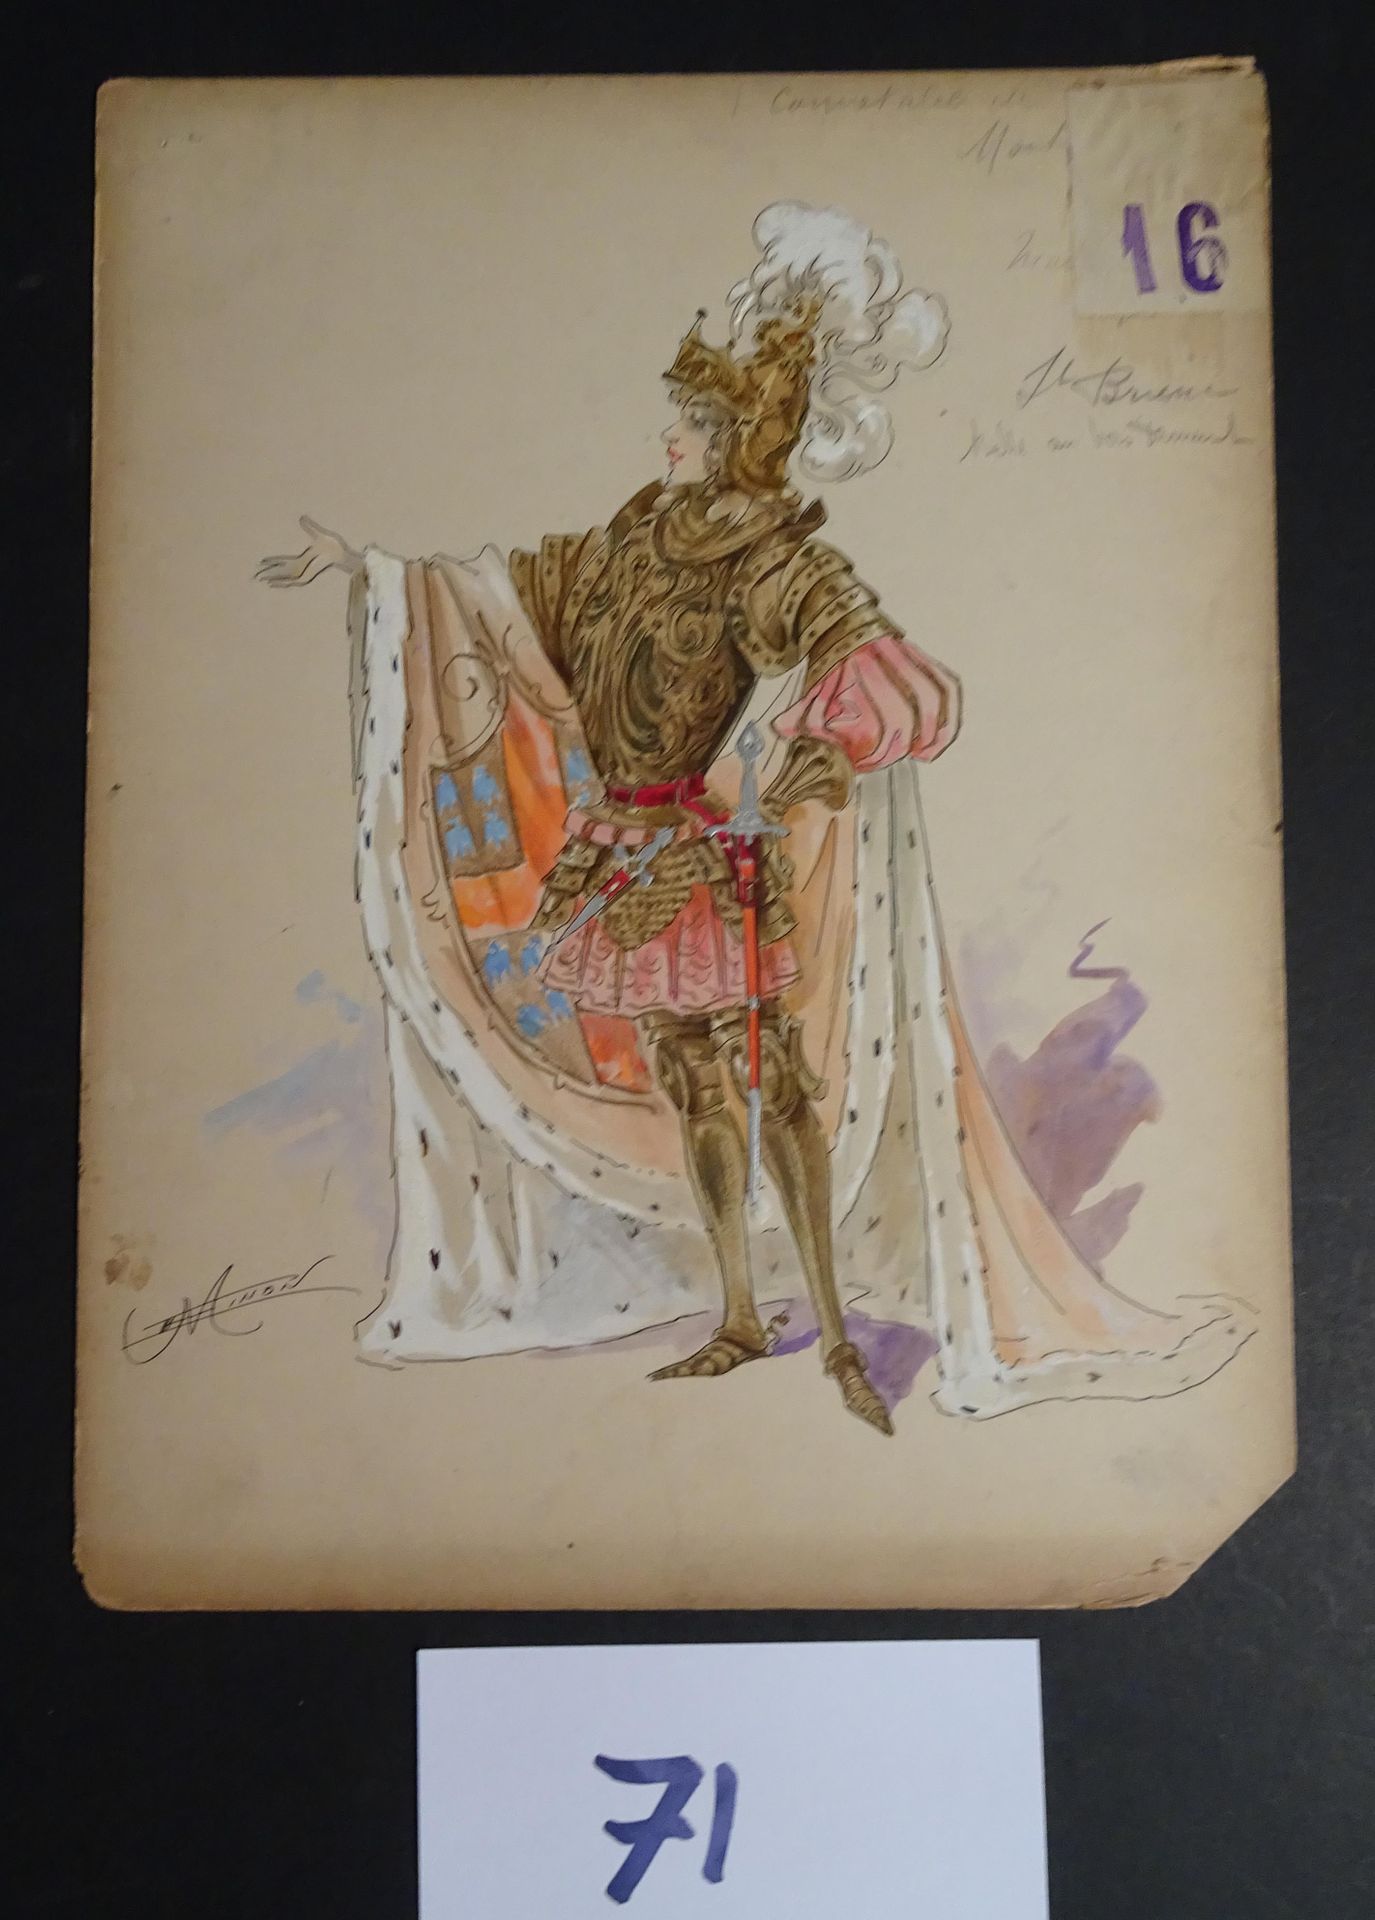 MINON 铭恩公司

"骑士 "约1880年为审查 "睡美人"。水彩水粉，印度墨水，已签名。32 x 25厘米。